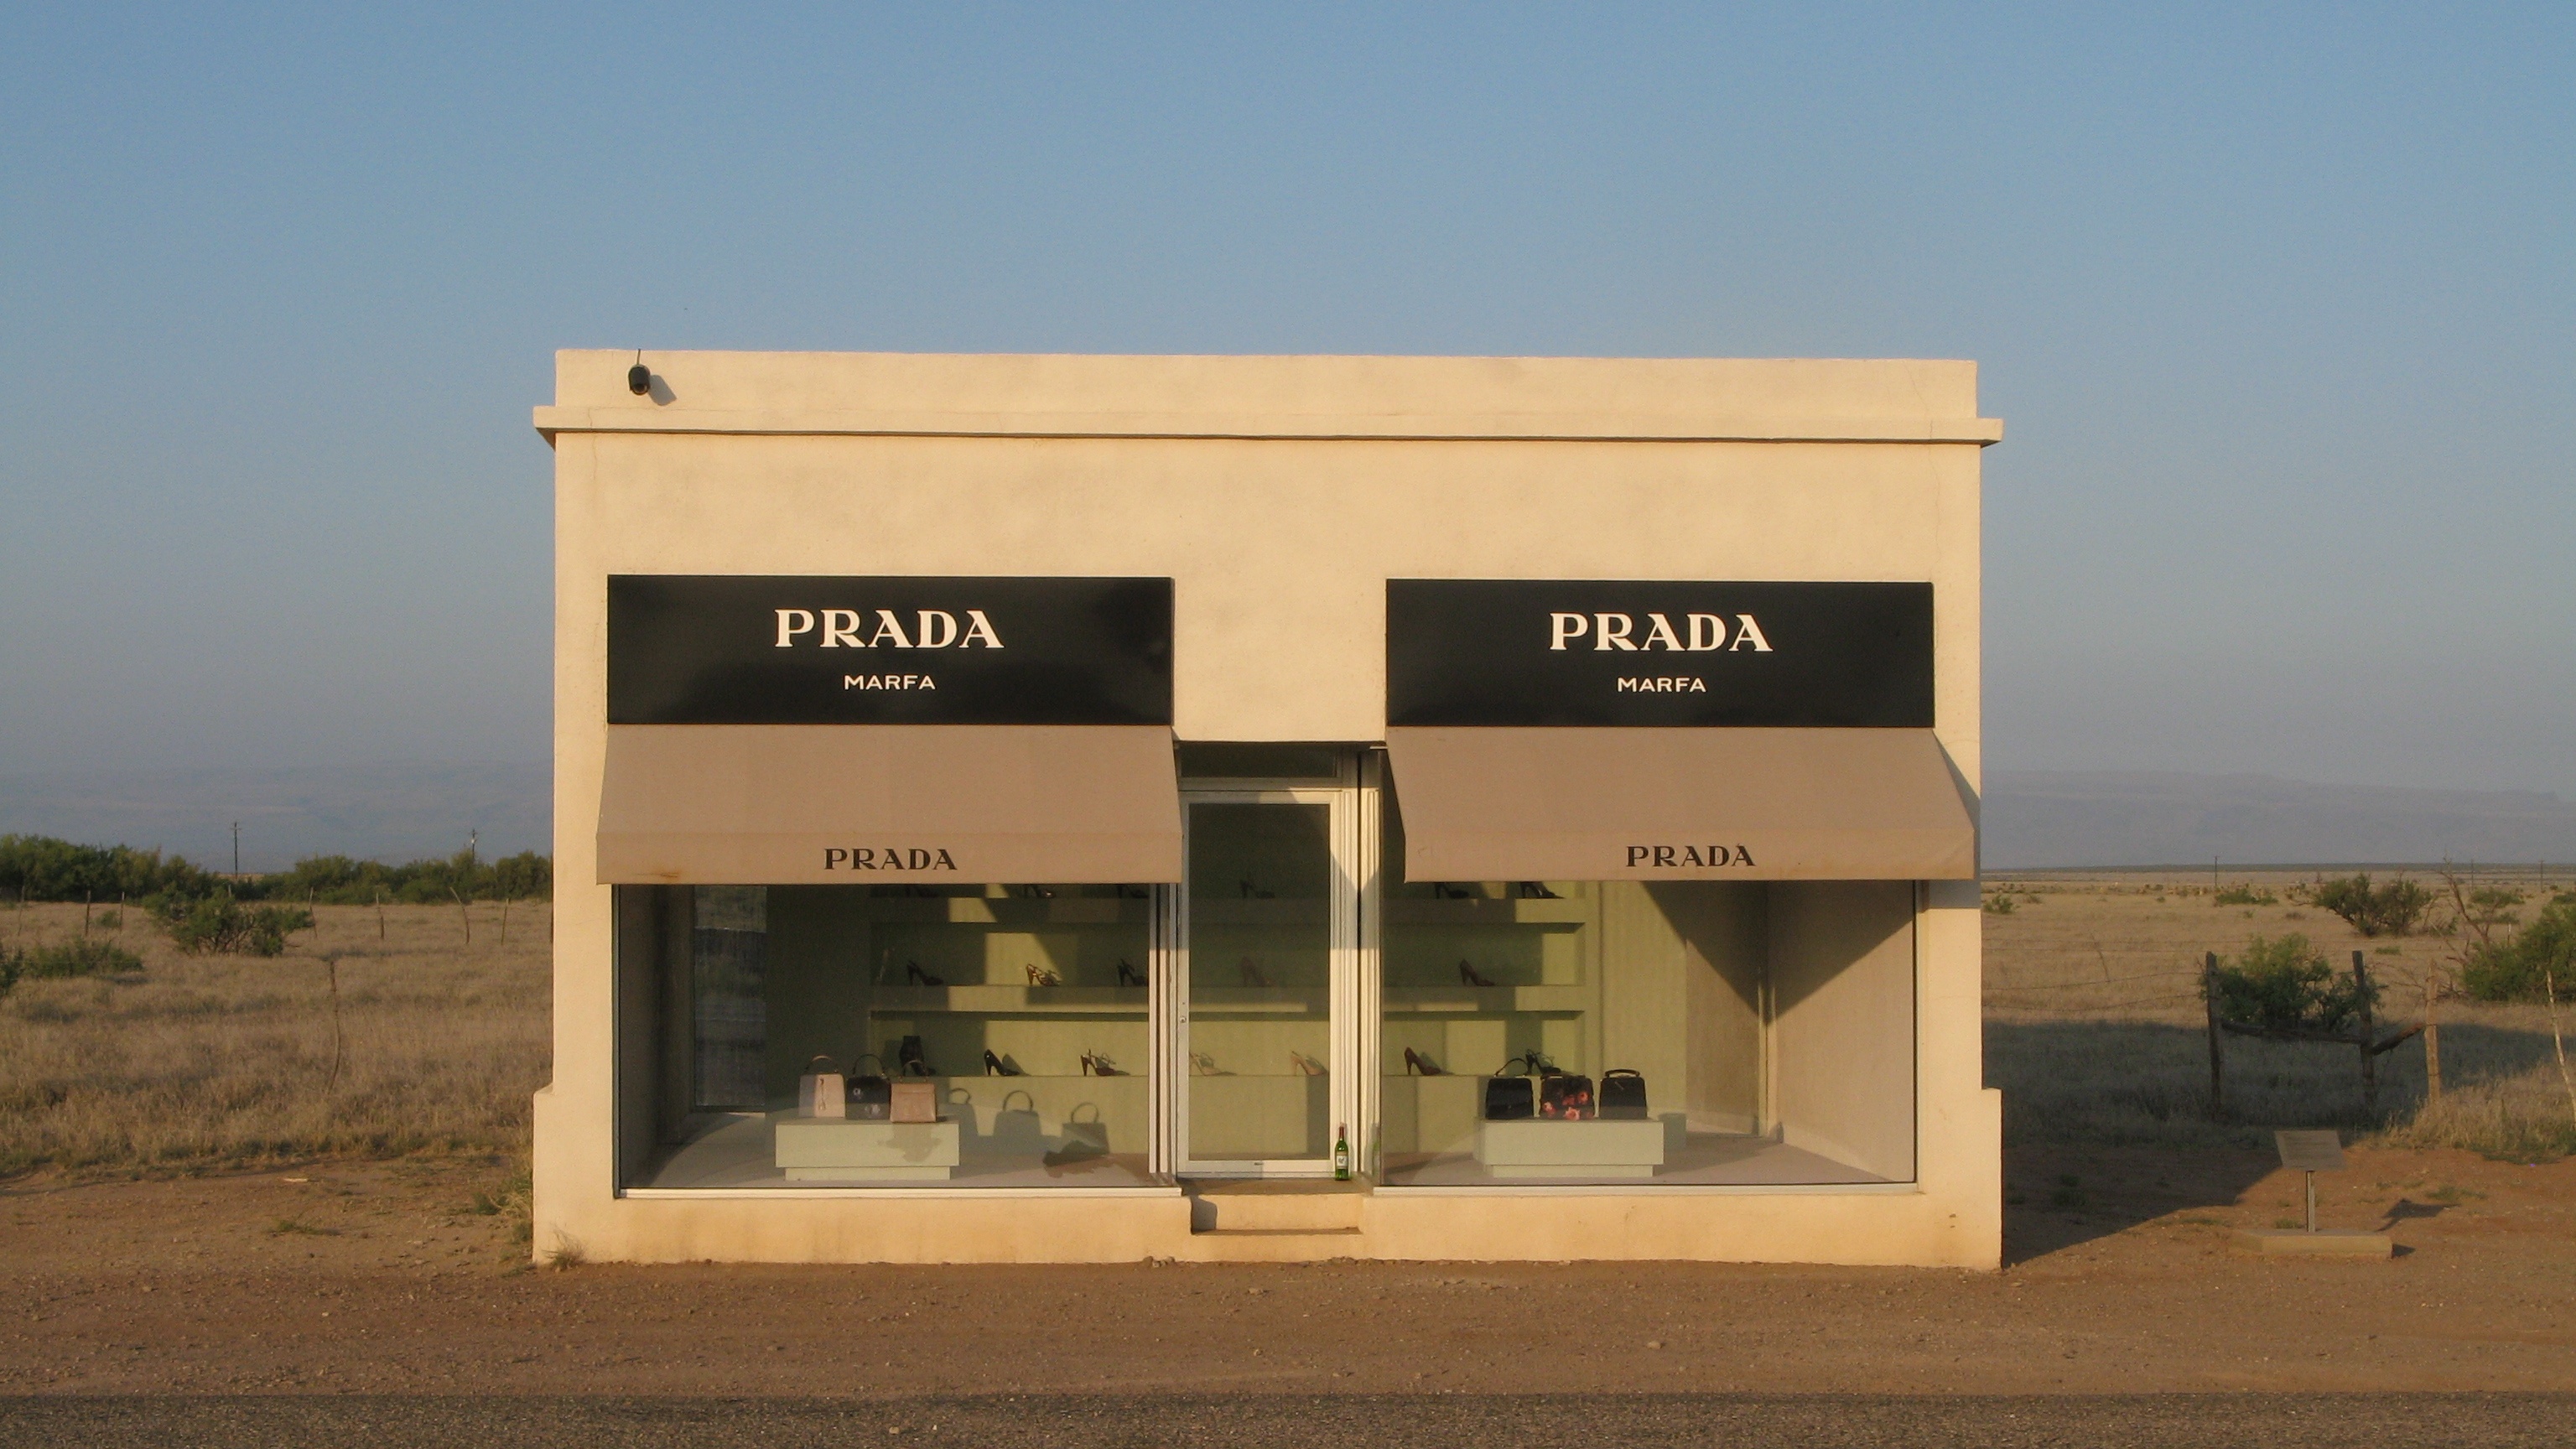 Prada Marfa: ten years on